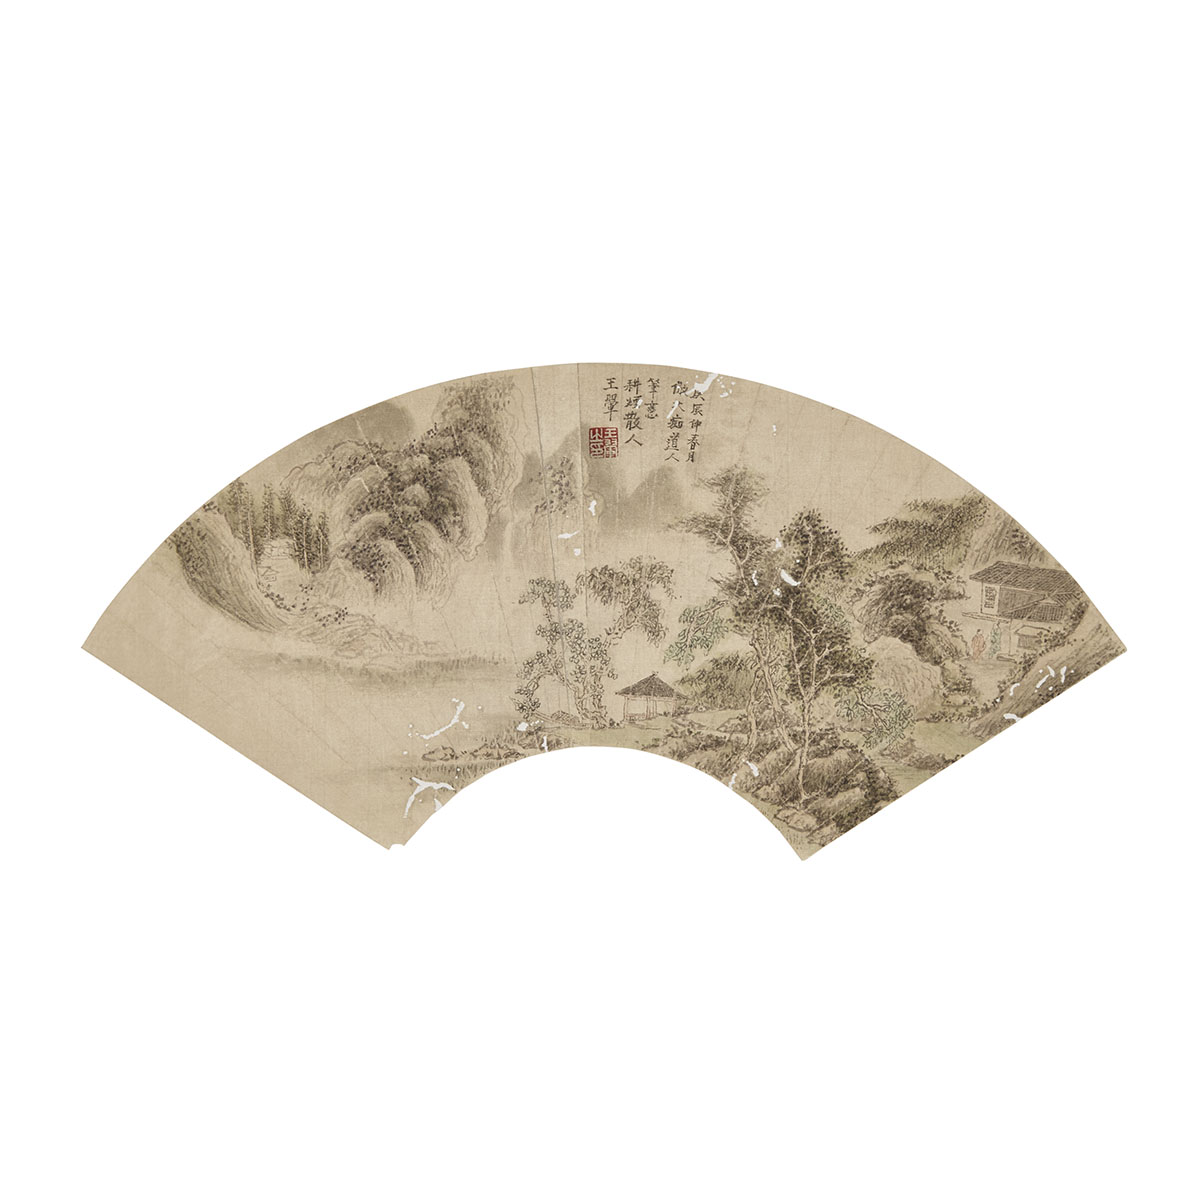 Attributed to Wang Hui (1632-1717)